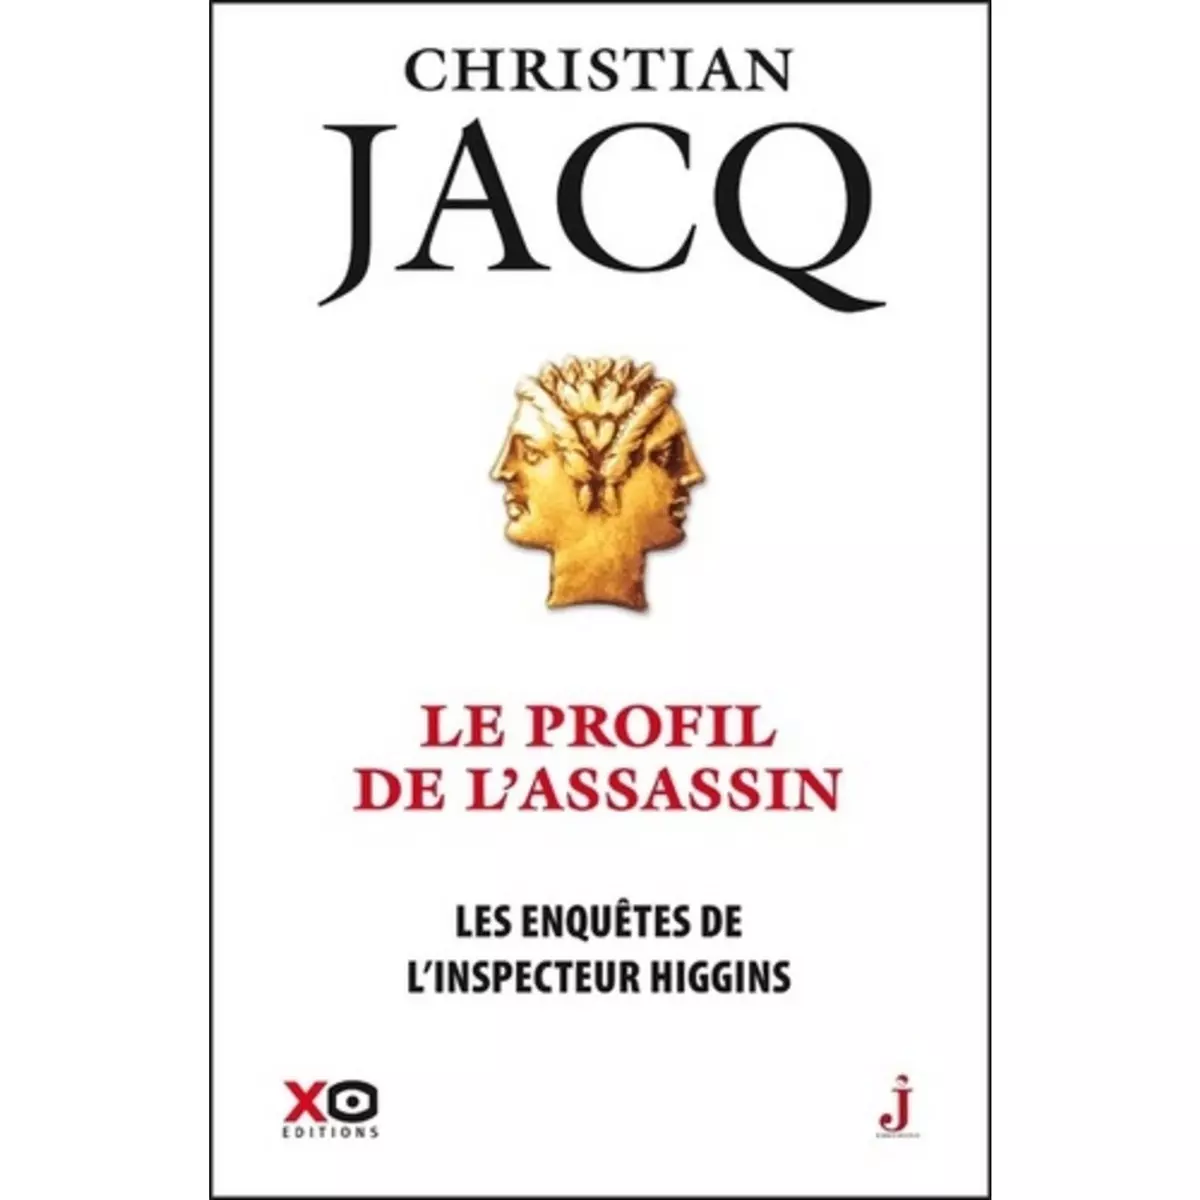  LES ENQUETES DE L'INSPECTEUR HIGGINS TOME 4 : LE PROFIL DE L'ASSASSIN, Jacq Christian